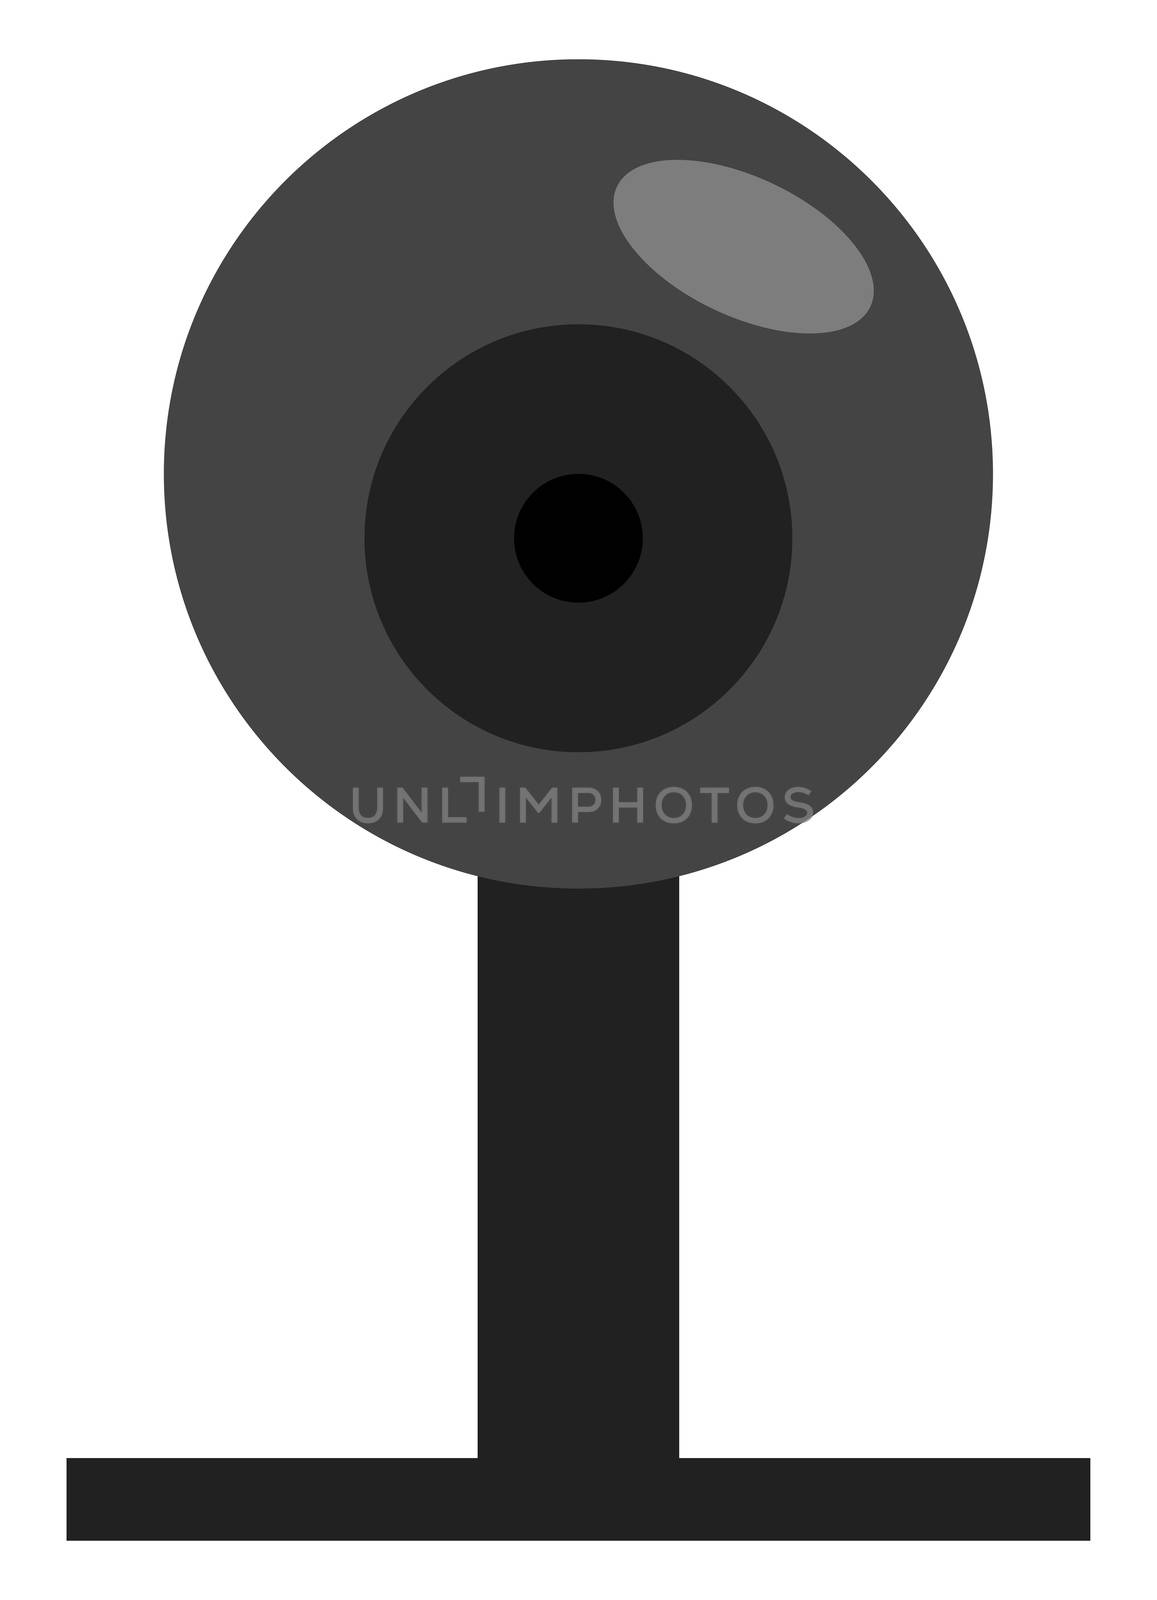 Web camera, illustration, vector on white background